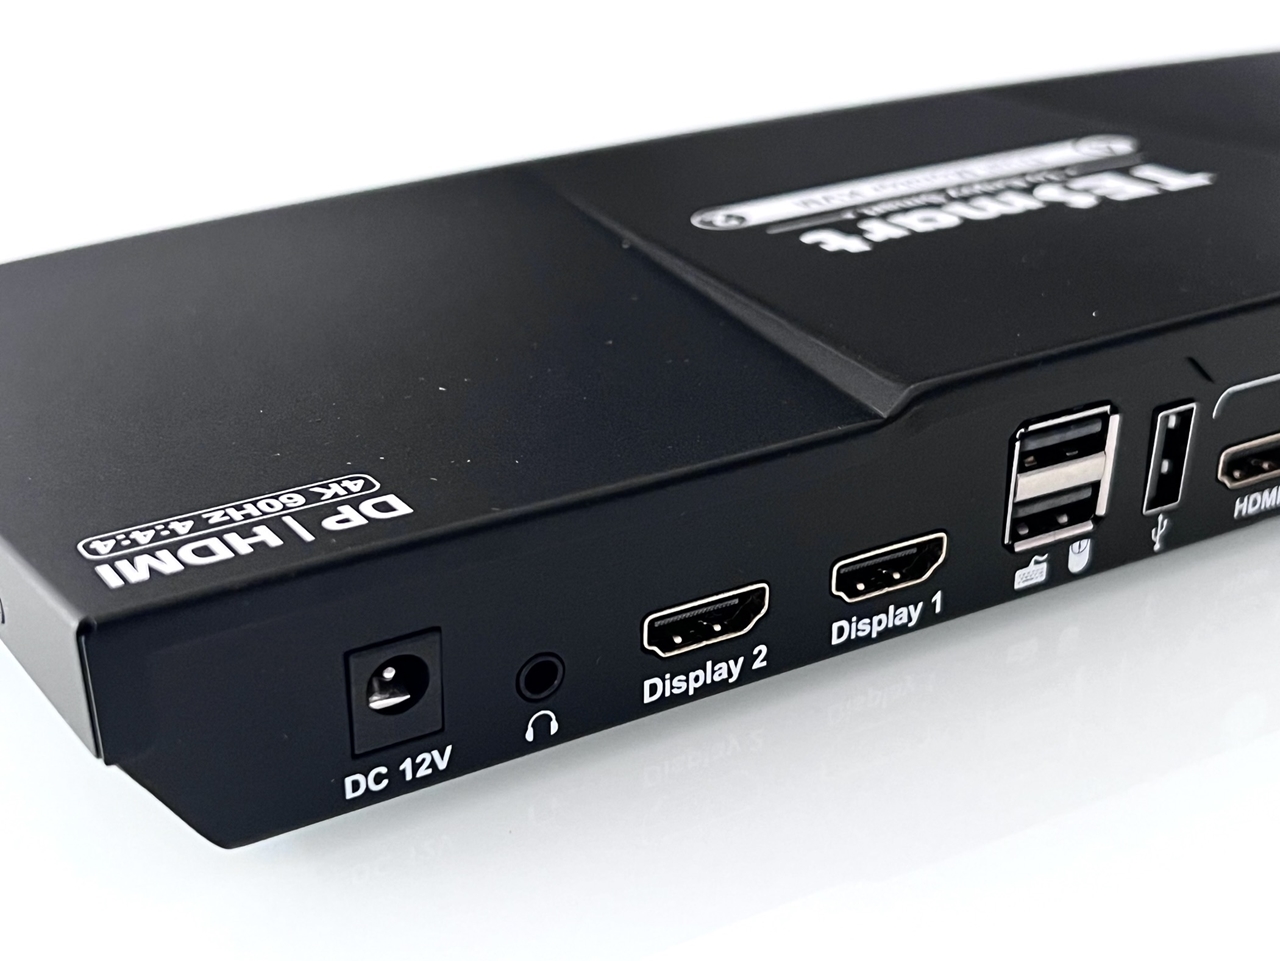 2 Port Dual Monitor KVM Switch Kit HDMI 4K30Hz with USB 2.0 Hub, EDID